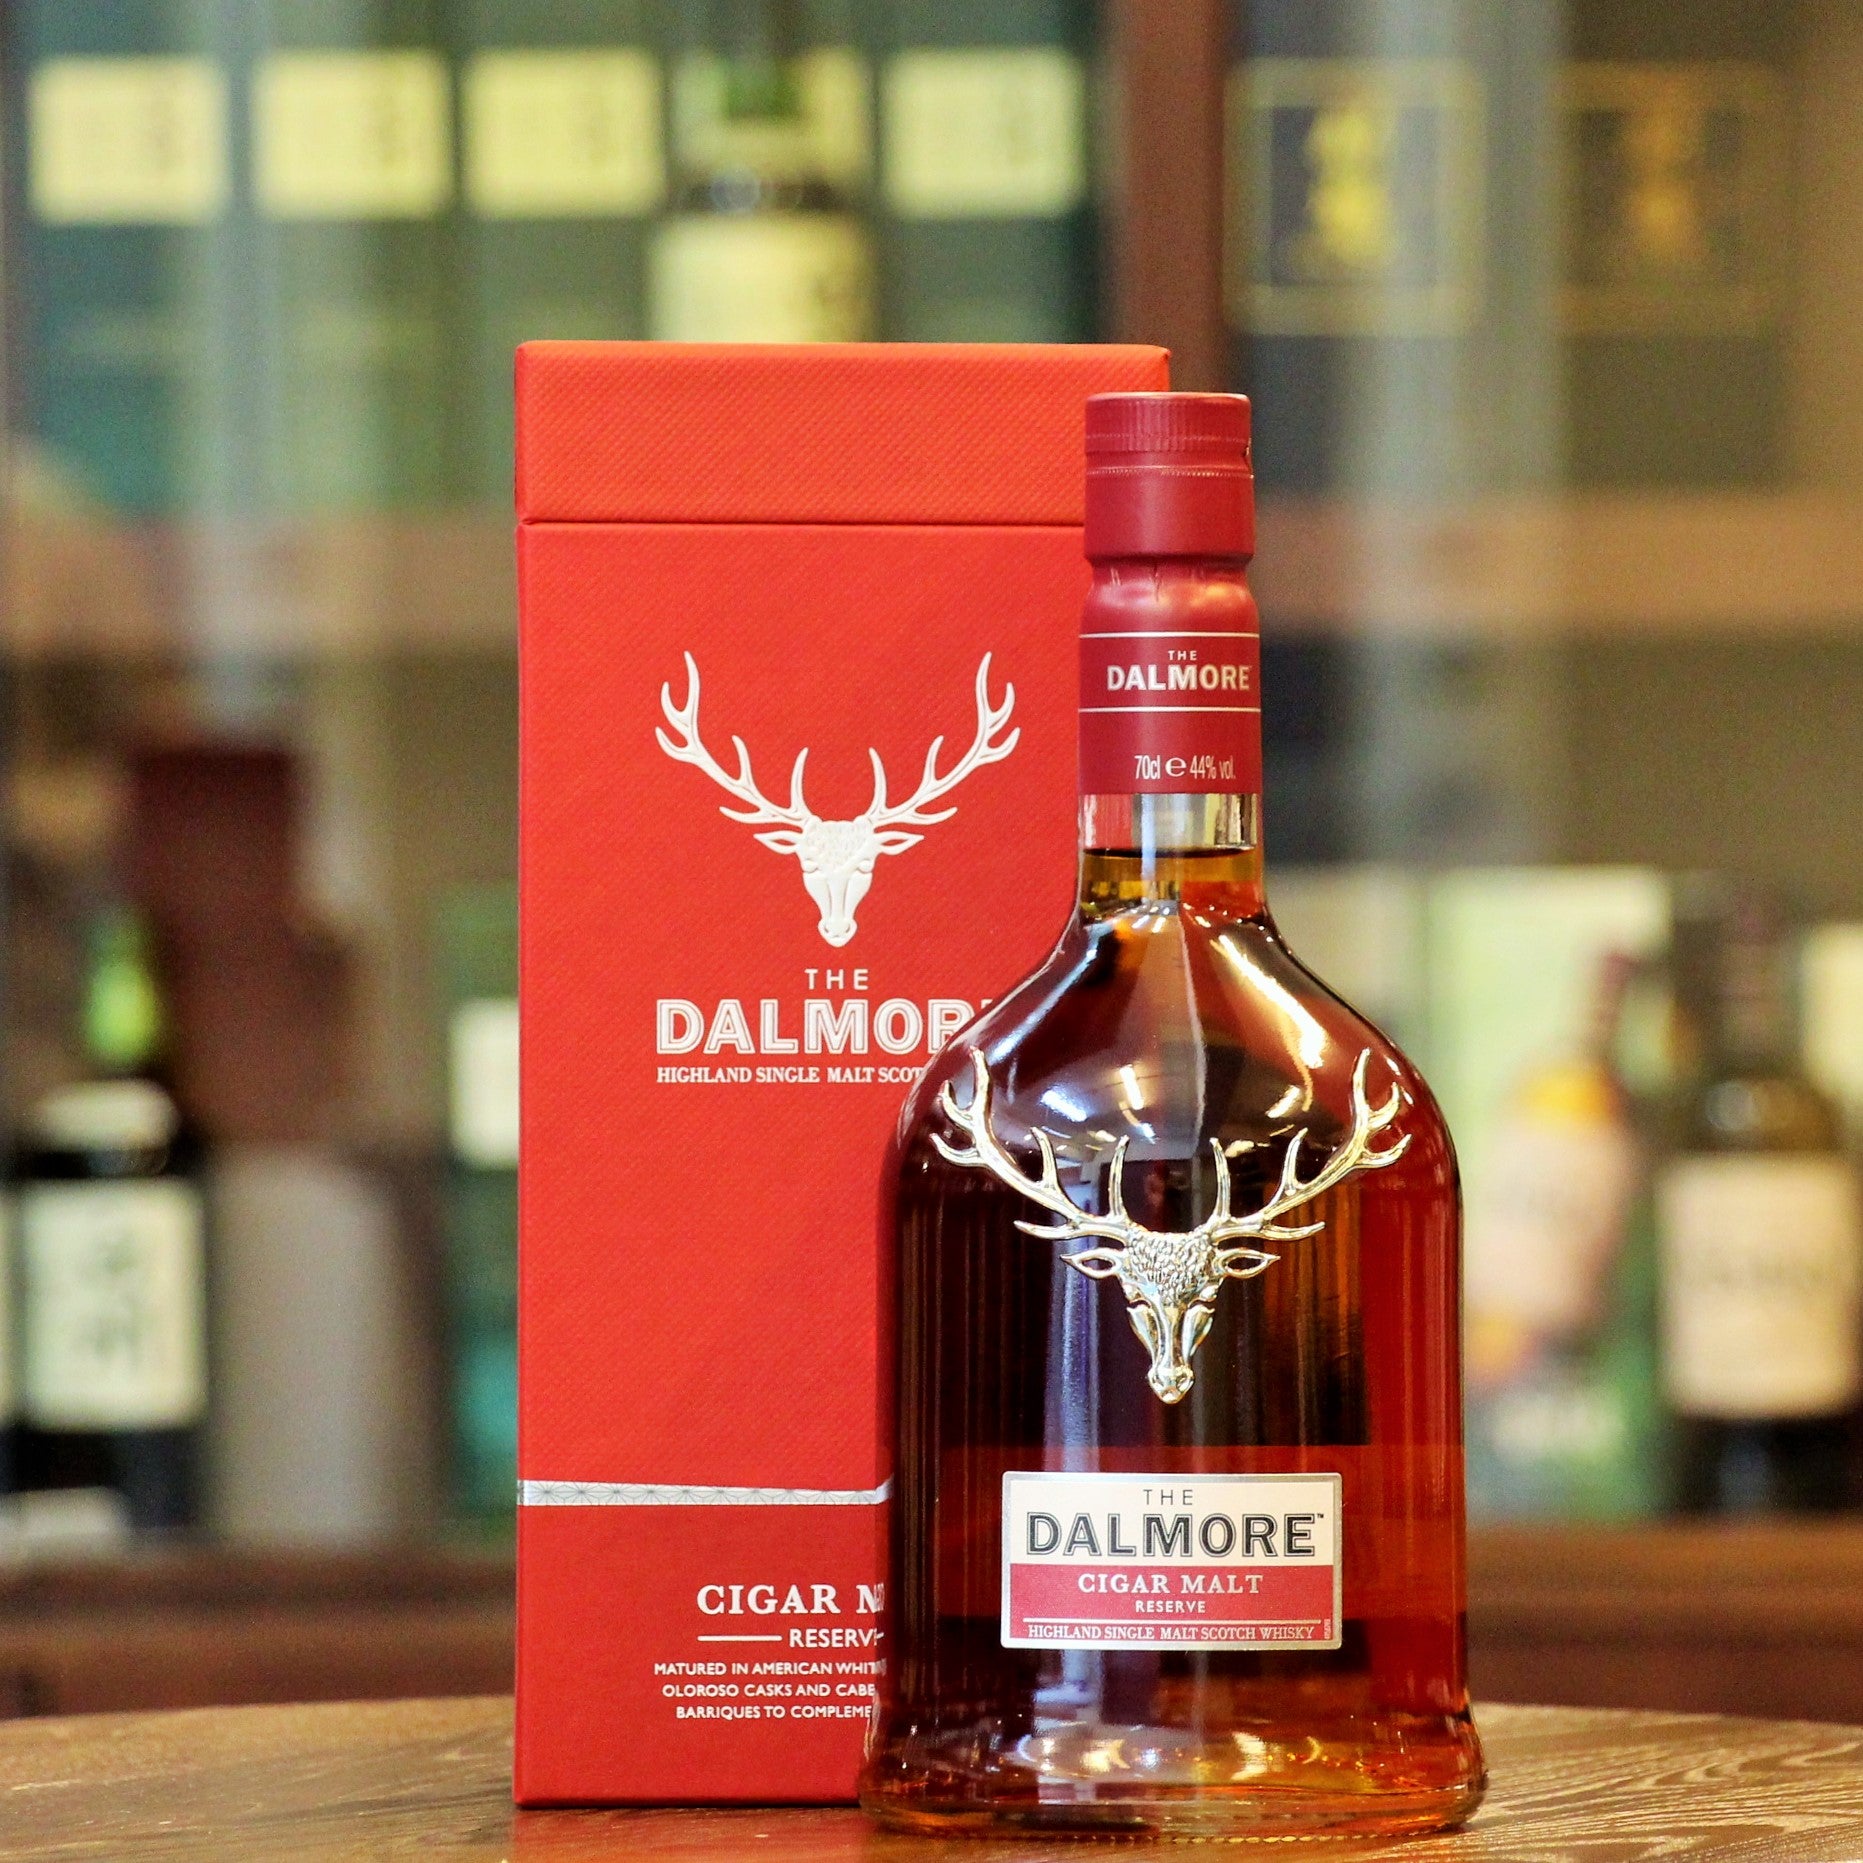 Dalmore Cigar Malt Reserve Single Malt Scotch Whisky A highland single malt